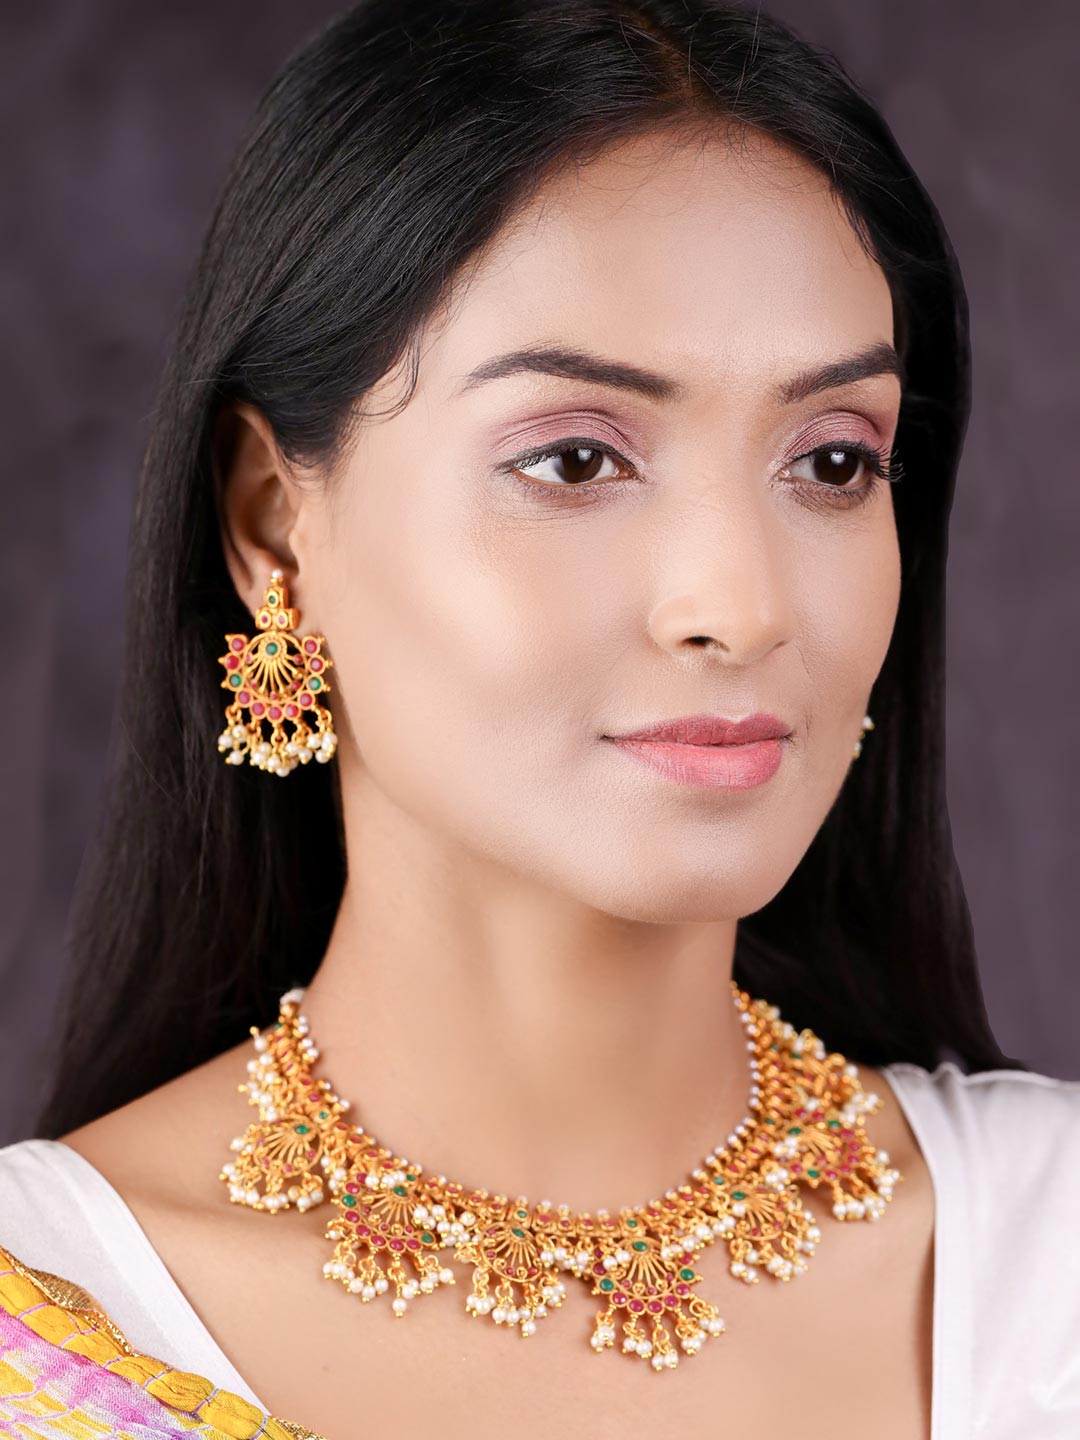 Srinagar Ras - Ruby Emerald Beads Gold Plated Jewellery Set